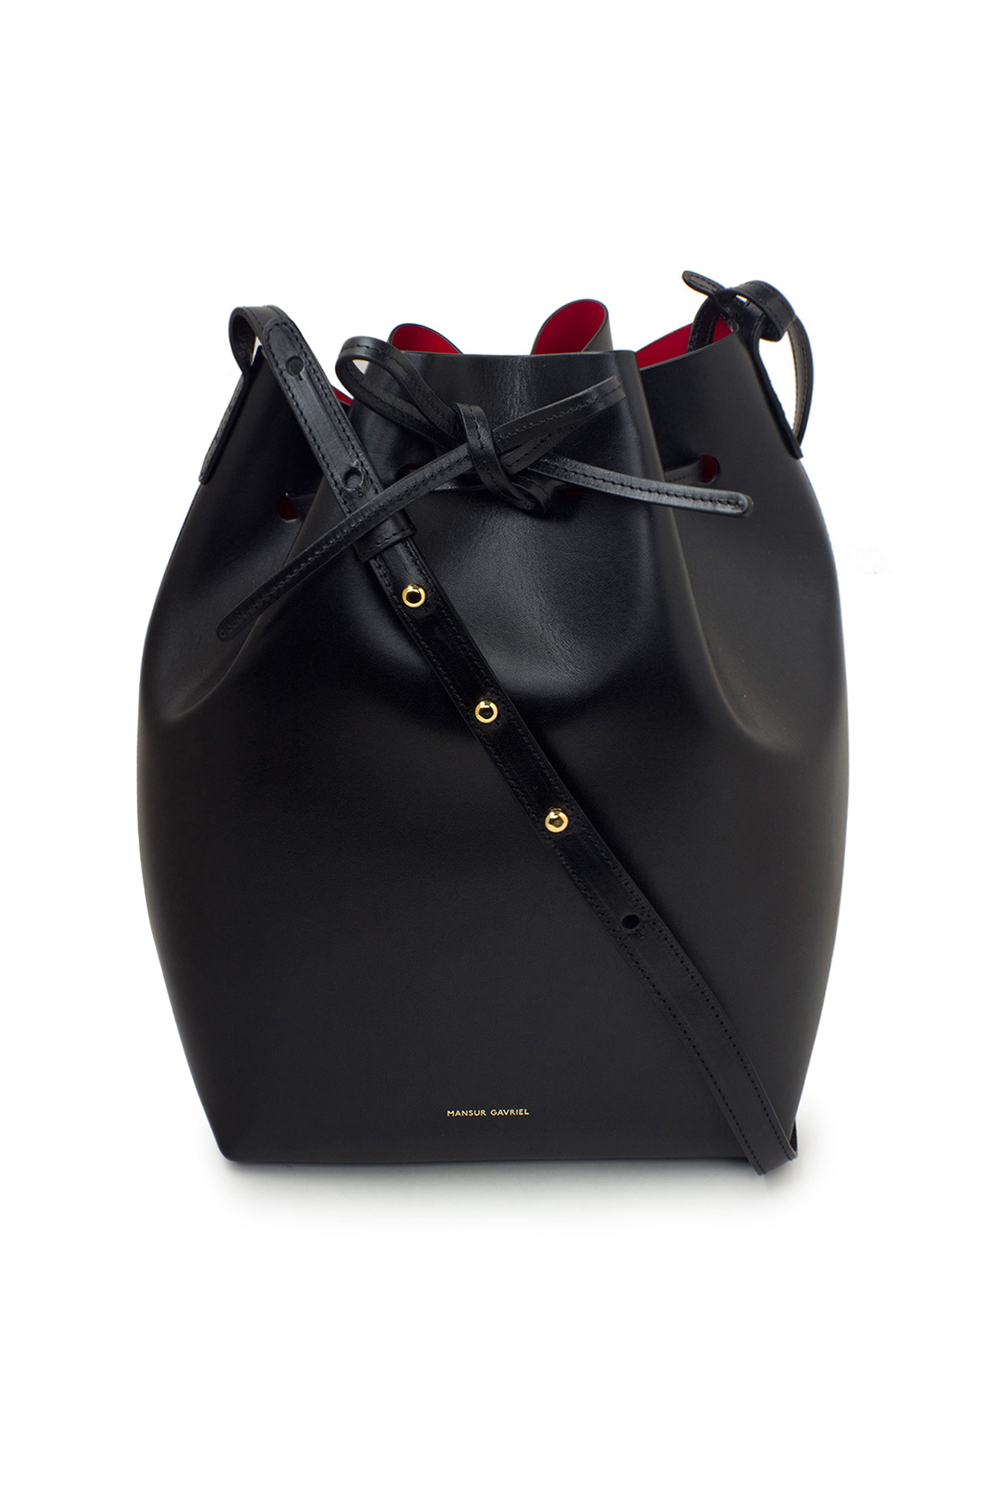 Mansur Gavriel Bucket Bag in Black. 